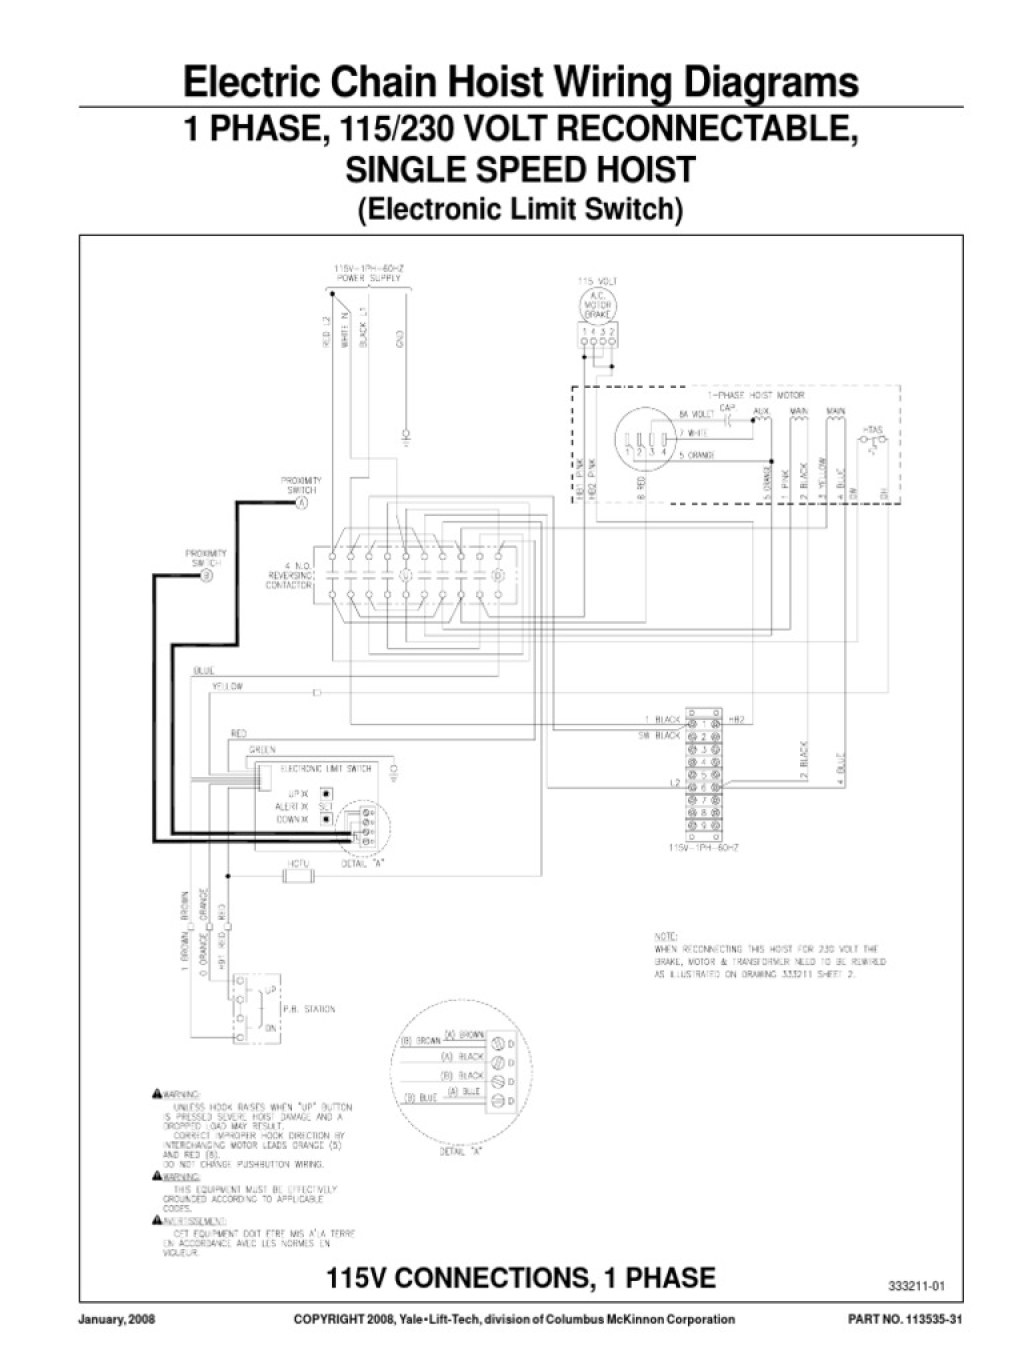 electric hoist single phase hoist wiring diagram - Electric Chain Hoist Wiring Diagrams   PDF  PDF